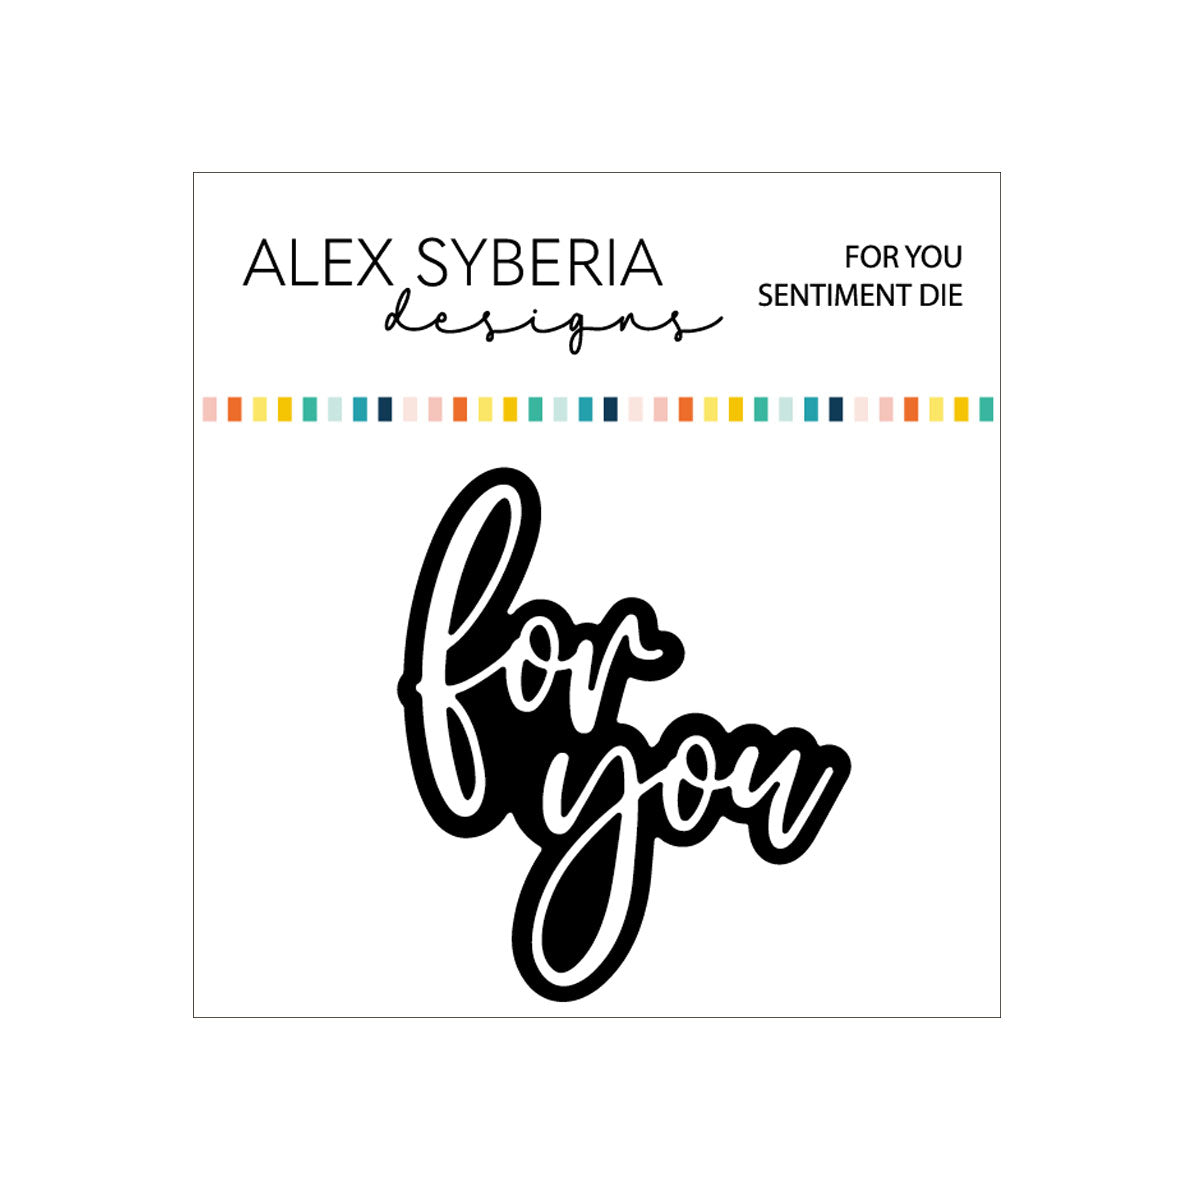 Alex Syberia Designs - Dies set - For You Sentiment